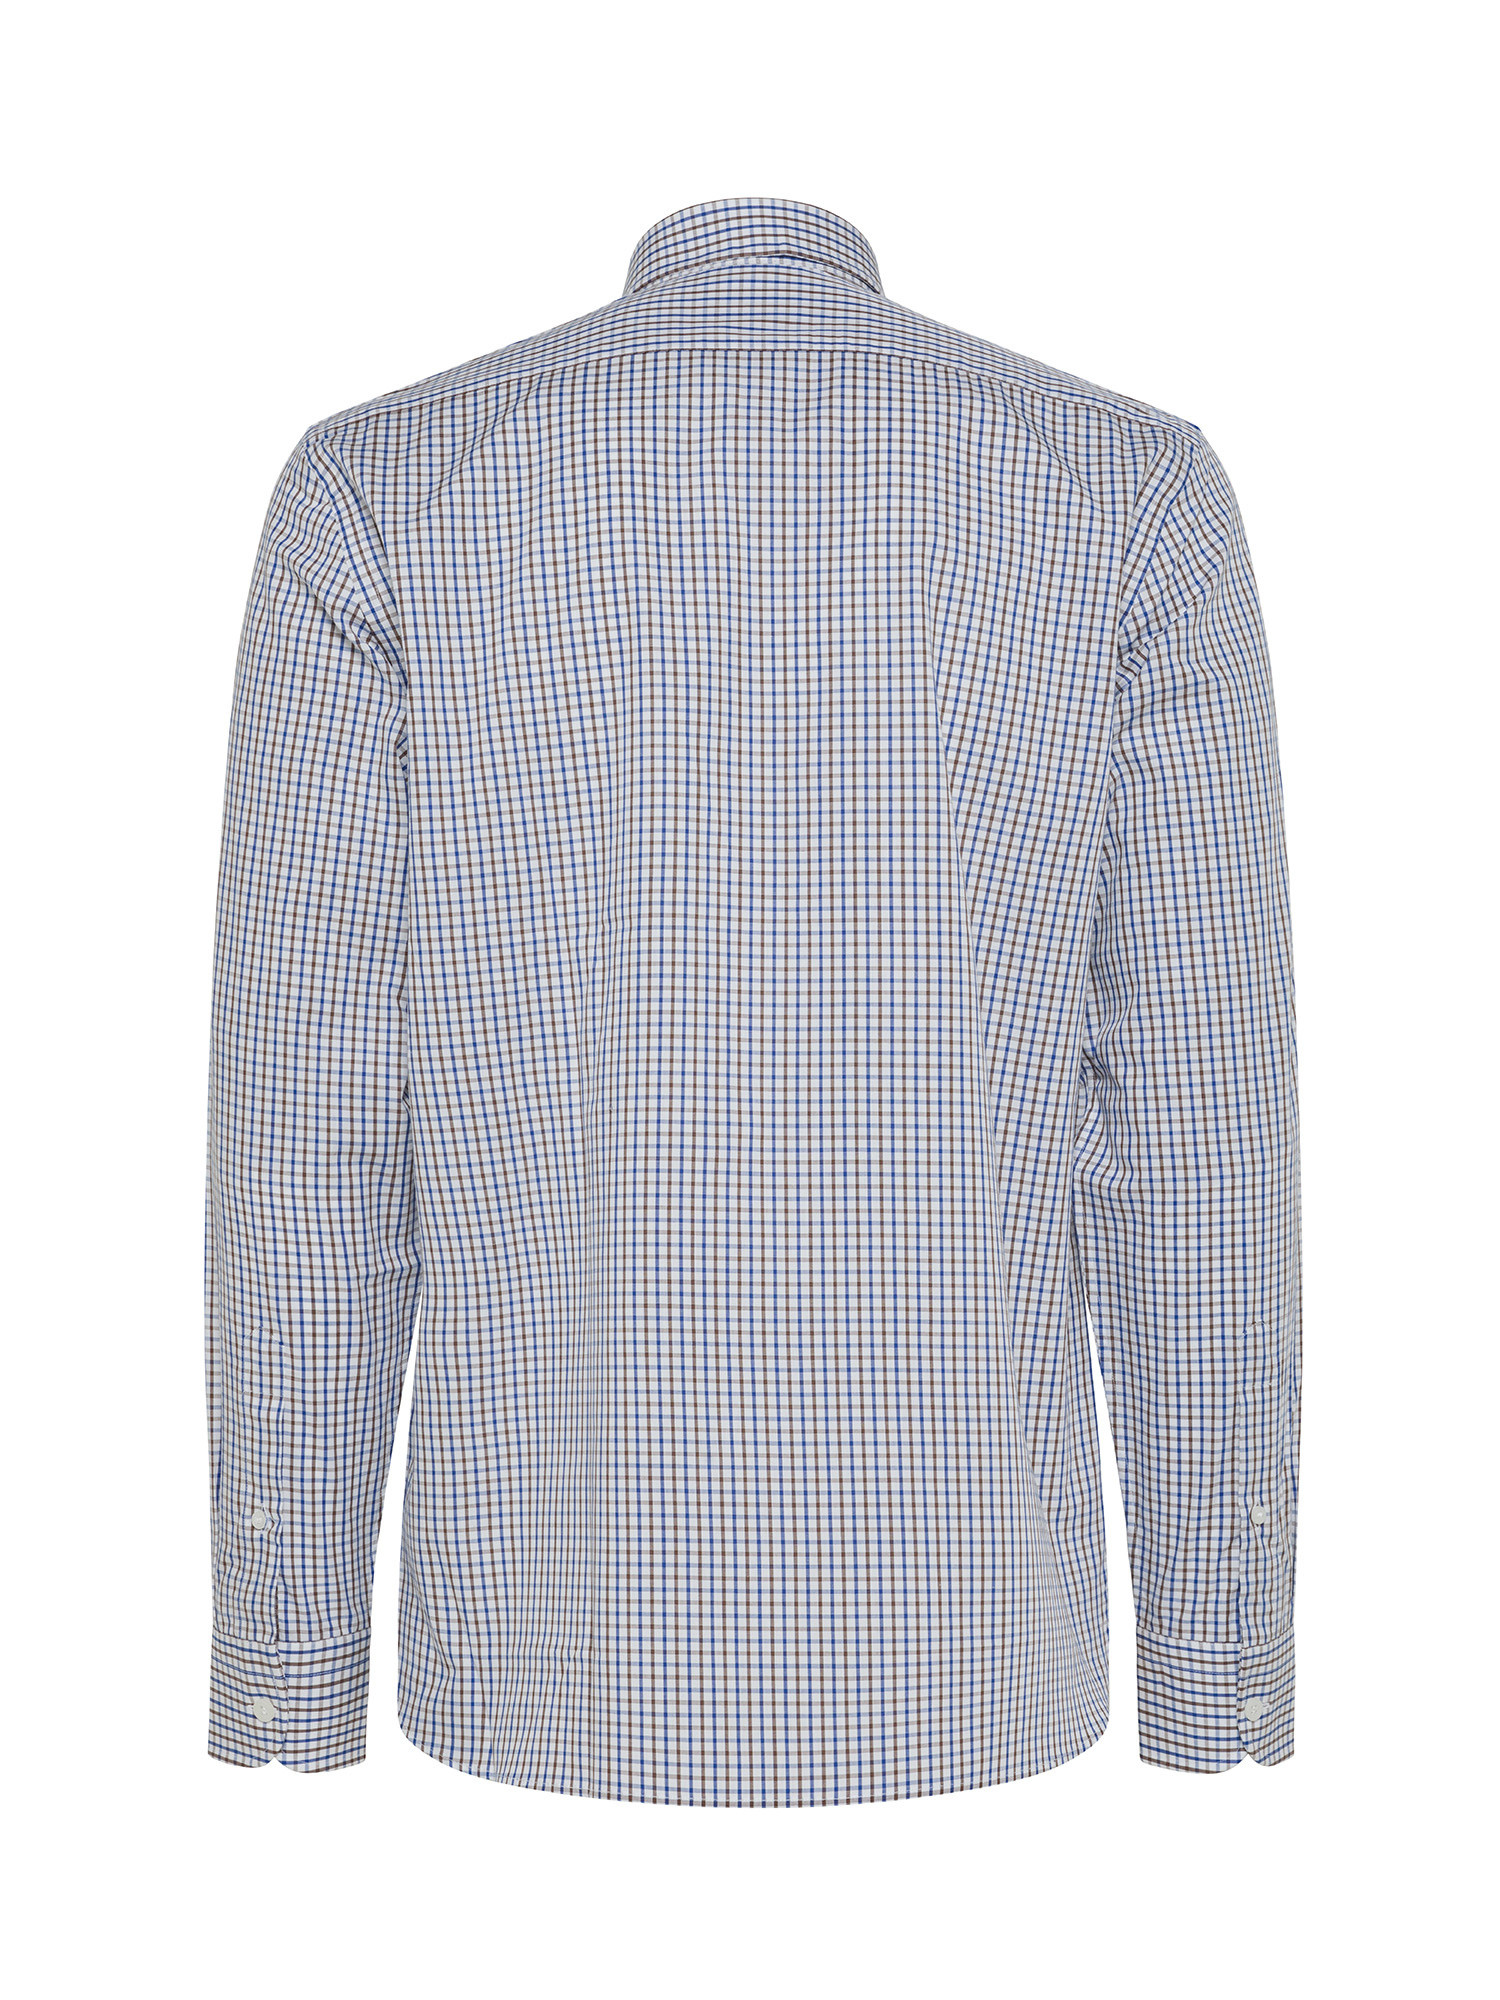 Luca D'Altieri - Camicia tailor fit in puro cotone, Azzurro, large image number 1